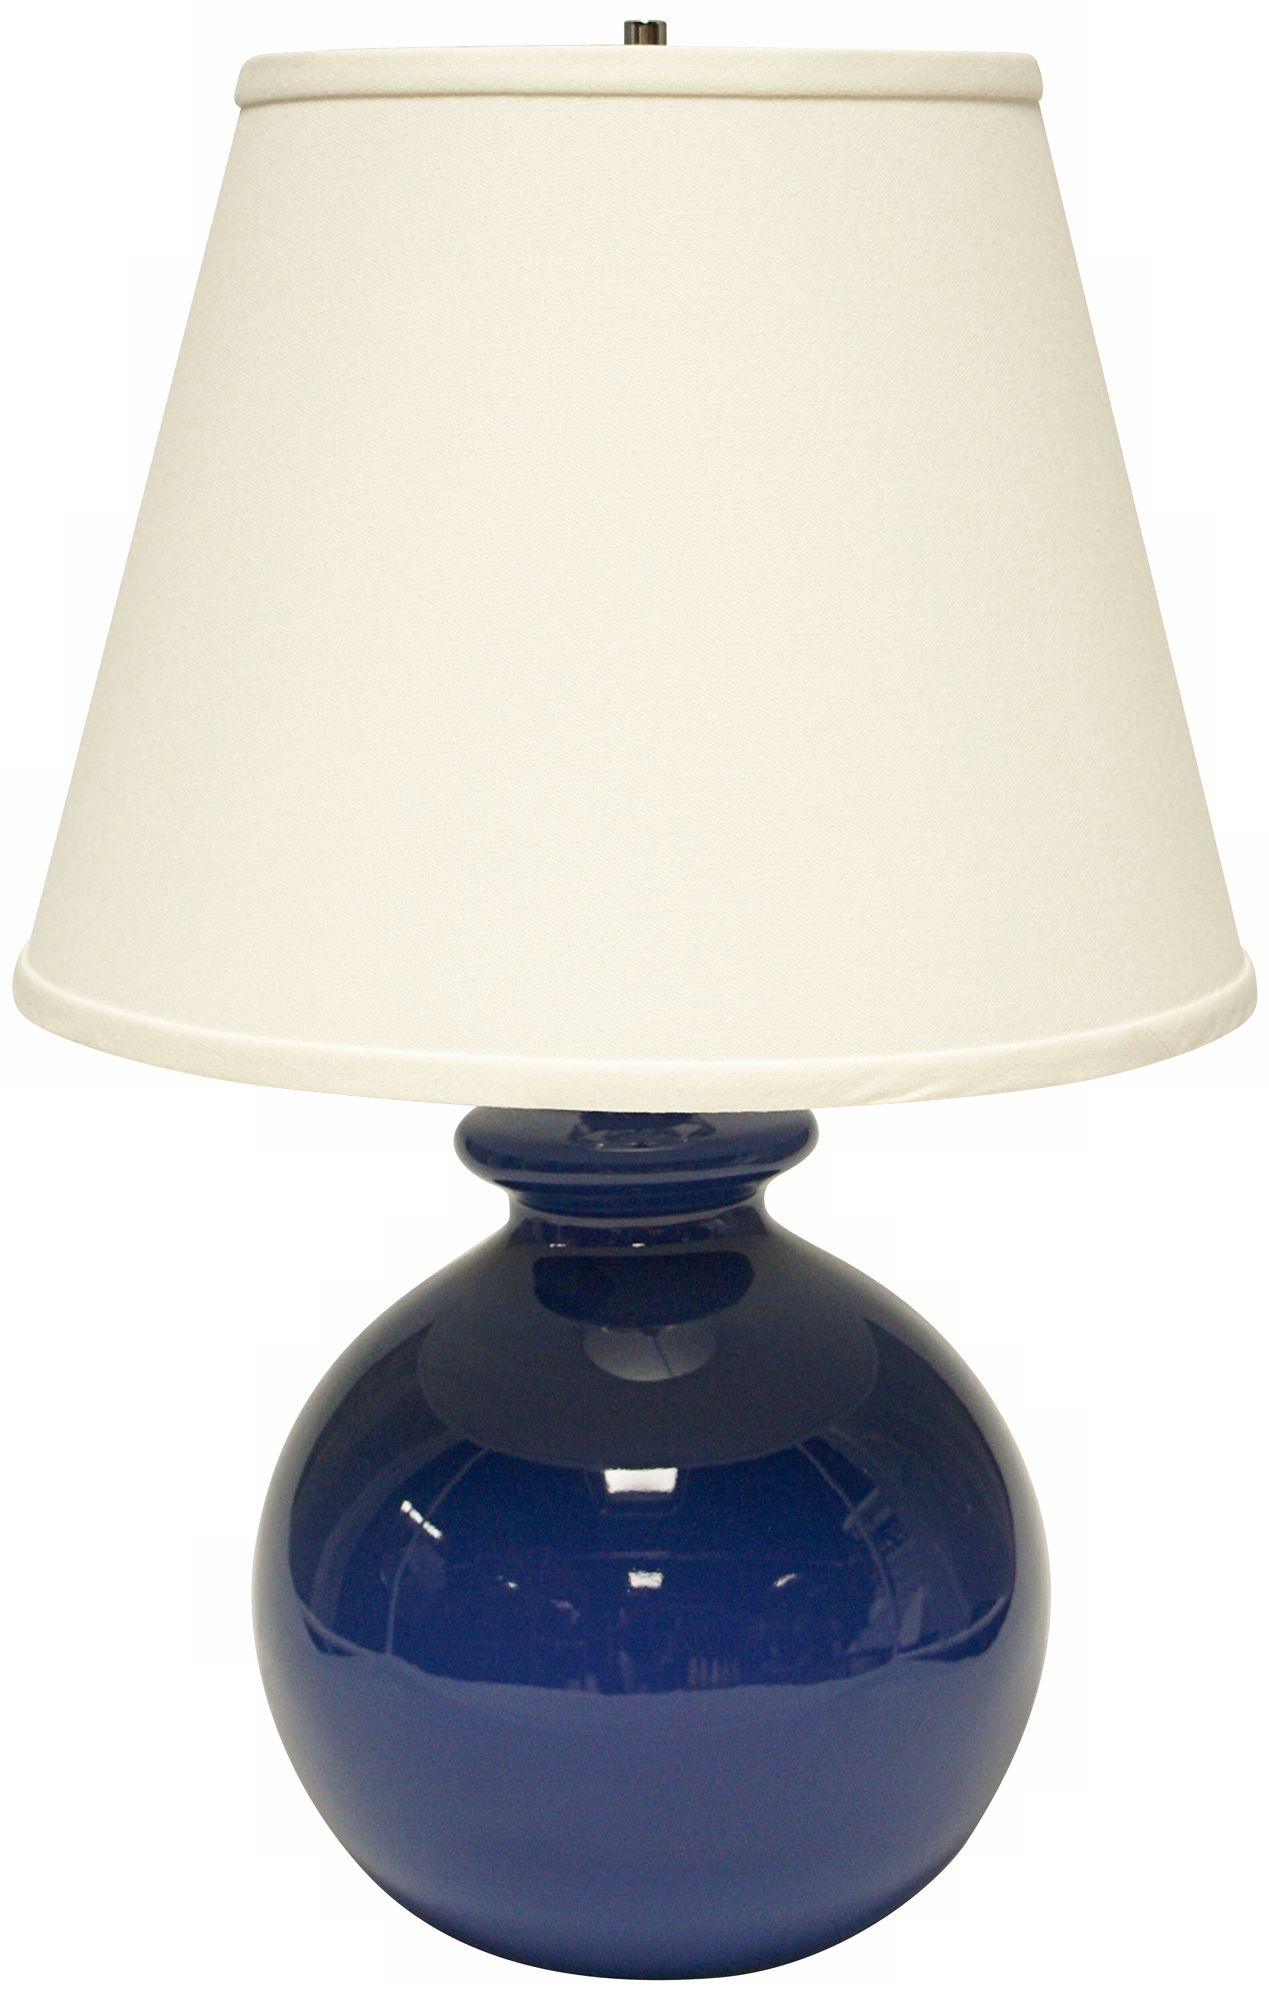 Haeger Potteries Blue Bristol Bottle Ceramic Table Lamp - Image 0